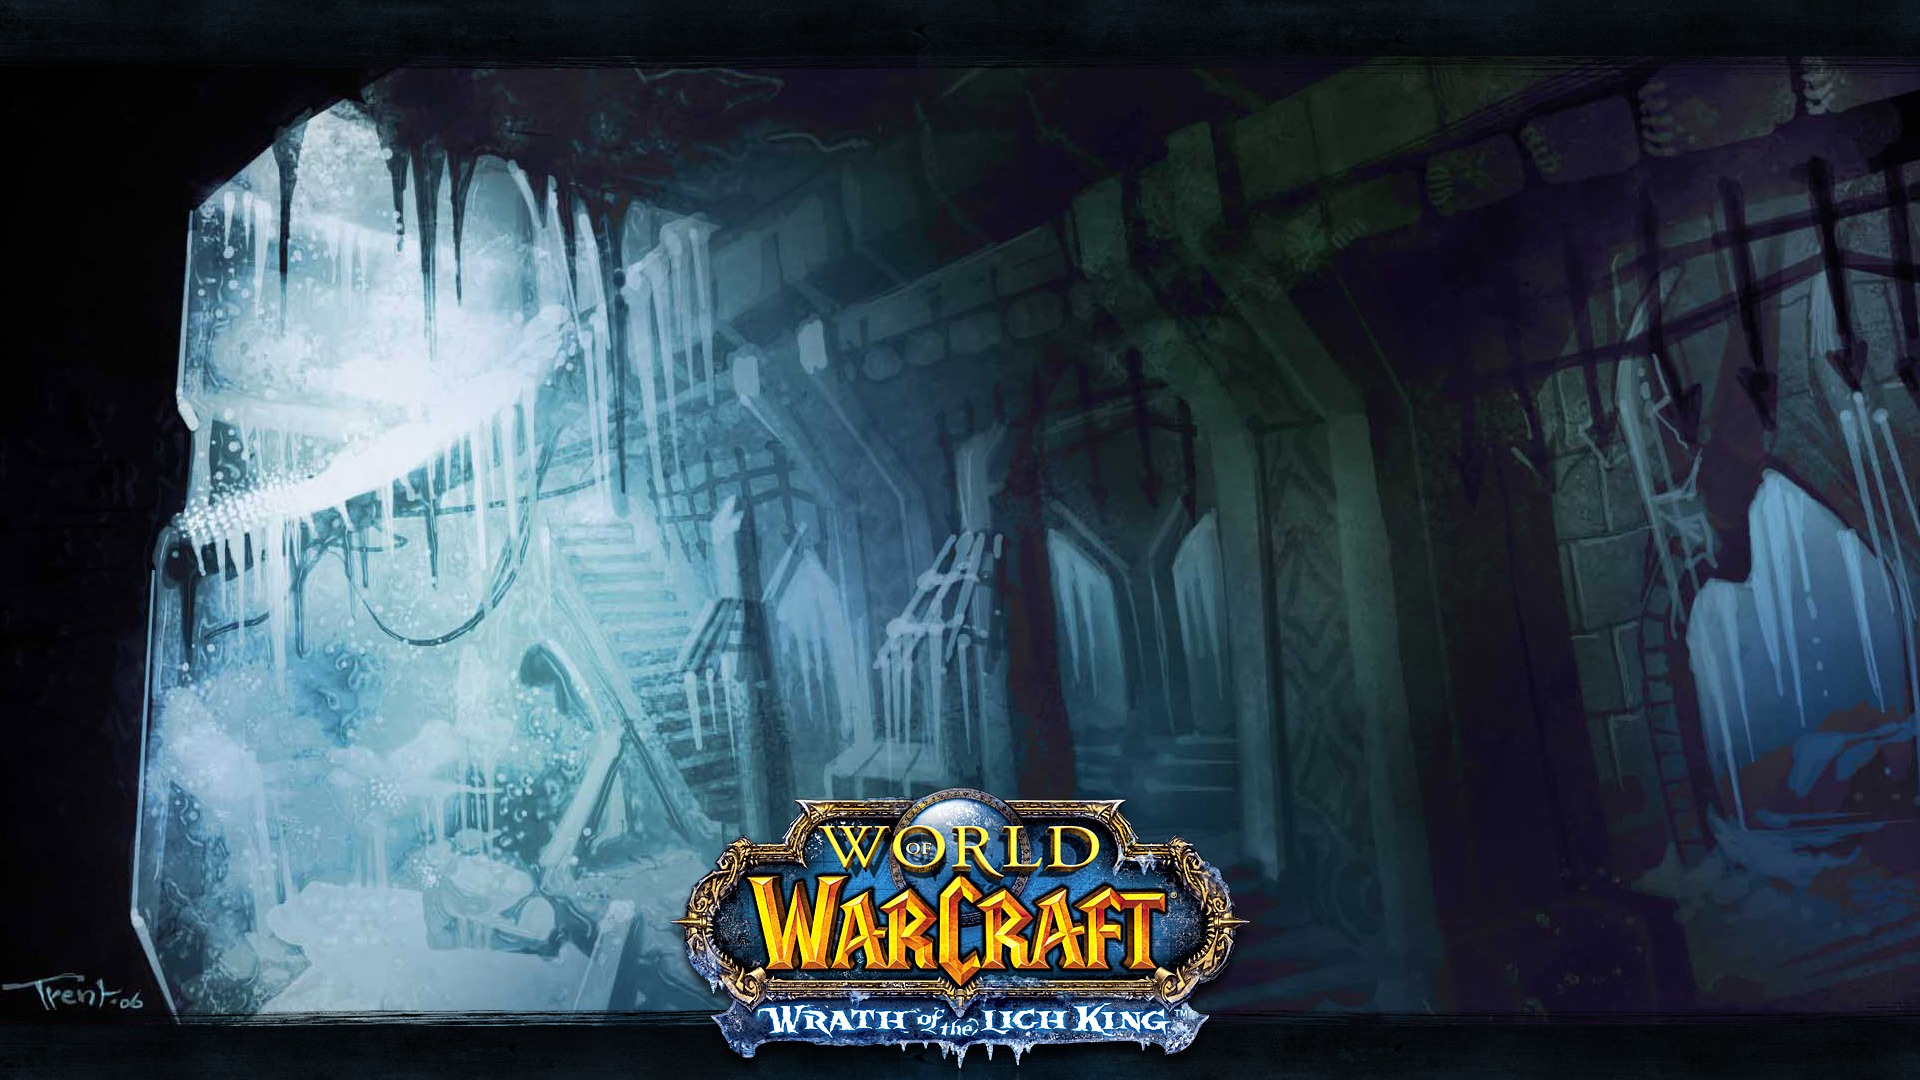 World of Warcraft 魔兽世界高清壁纸(二)4 - 1920x1080